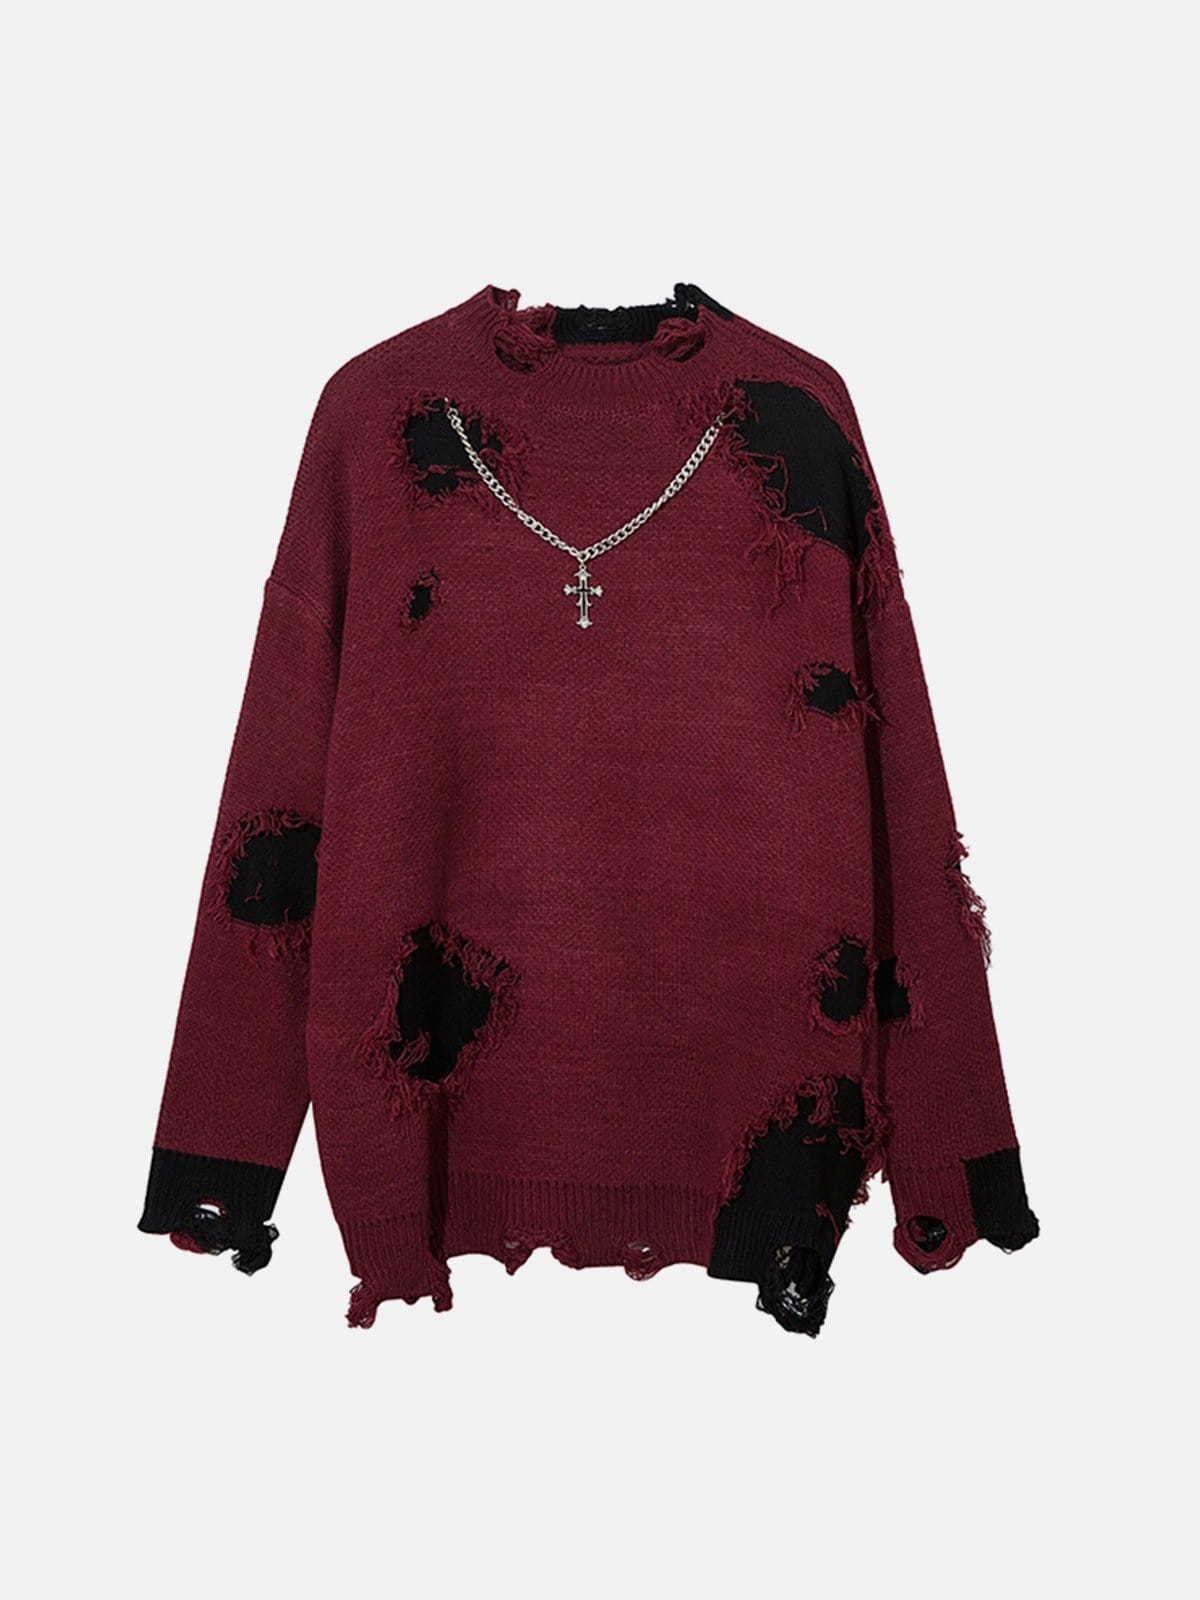 Hole Crucifix Necklace Sweater Streetwear Brand Techwear Combat Tactical YUGEN THEORY